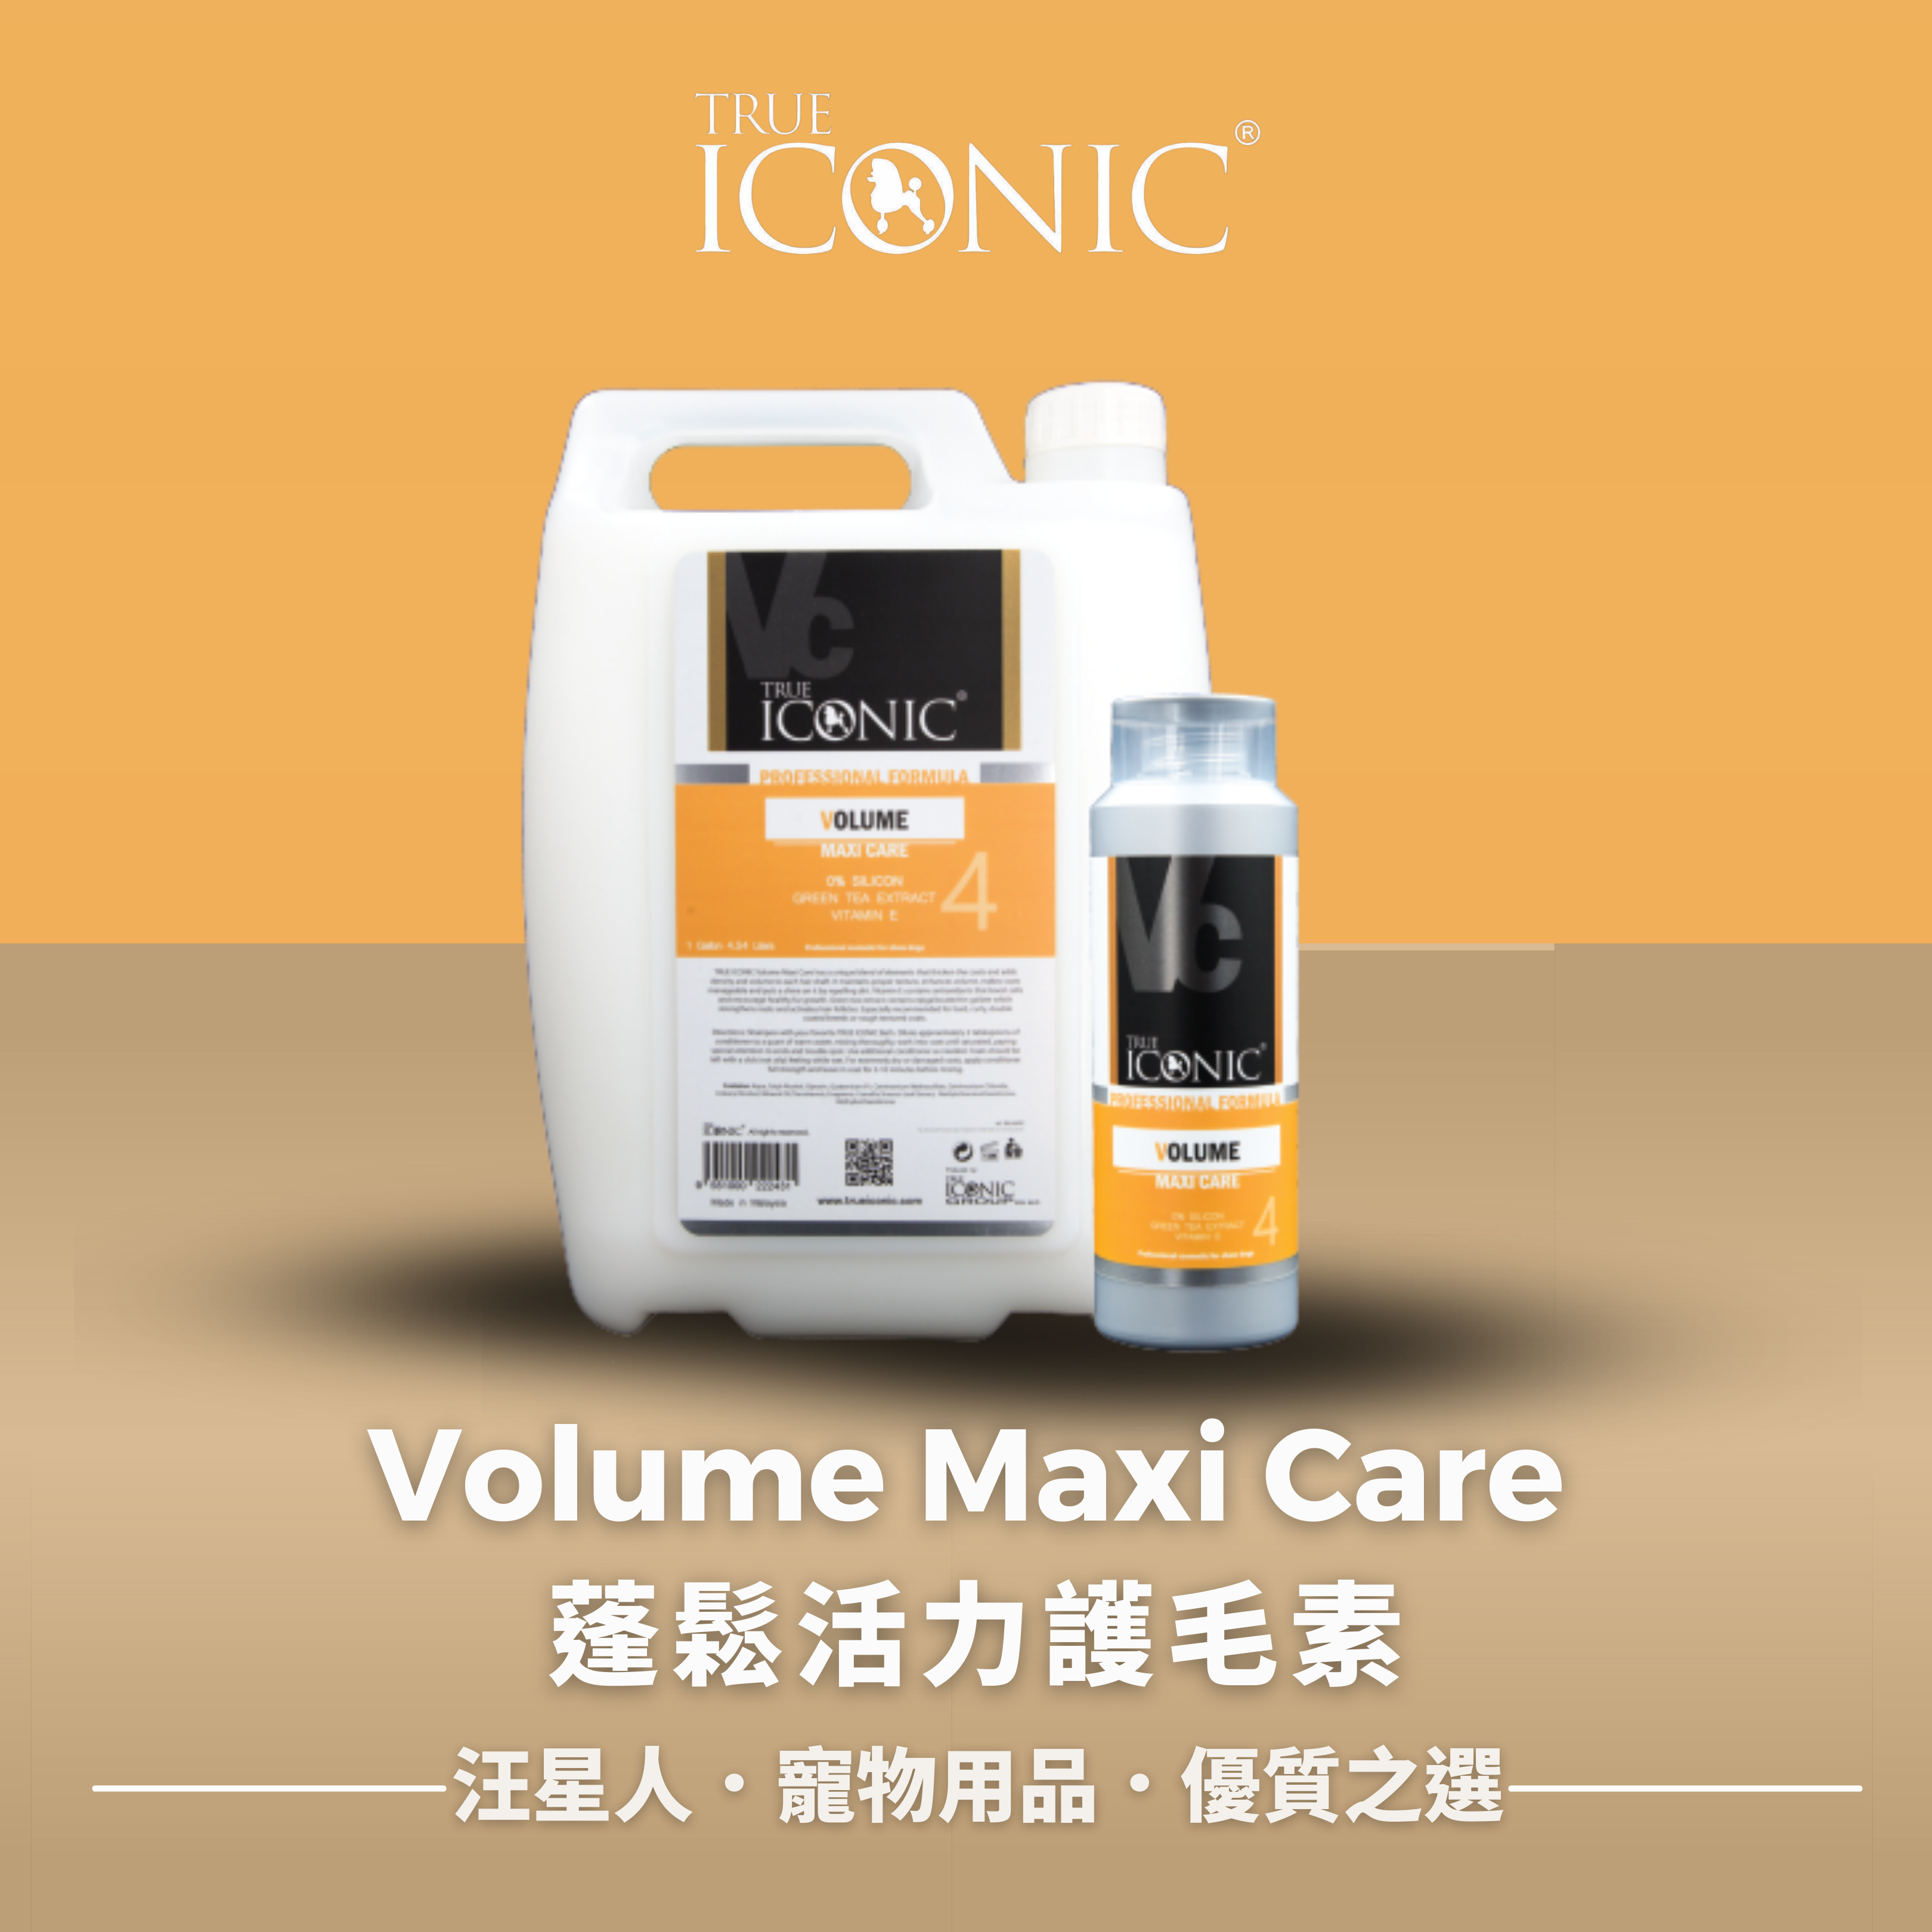 Volume Maxi Care 蓬鬆活力護毛素